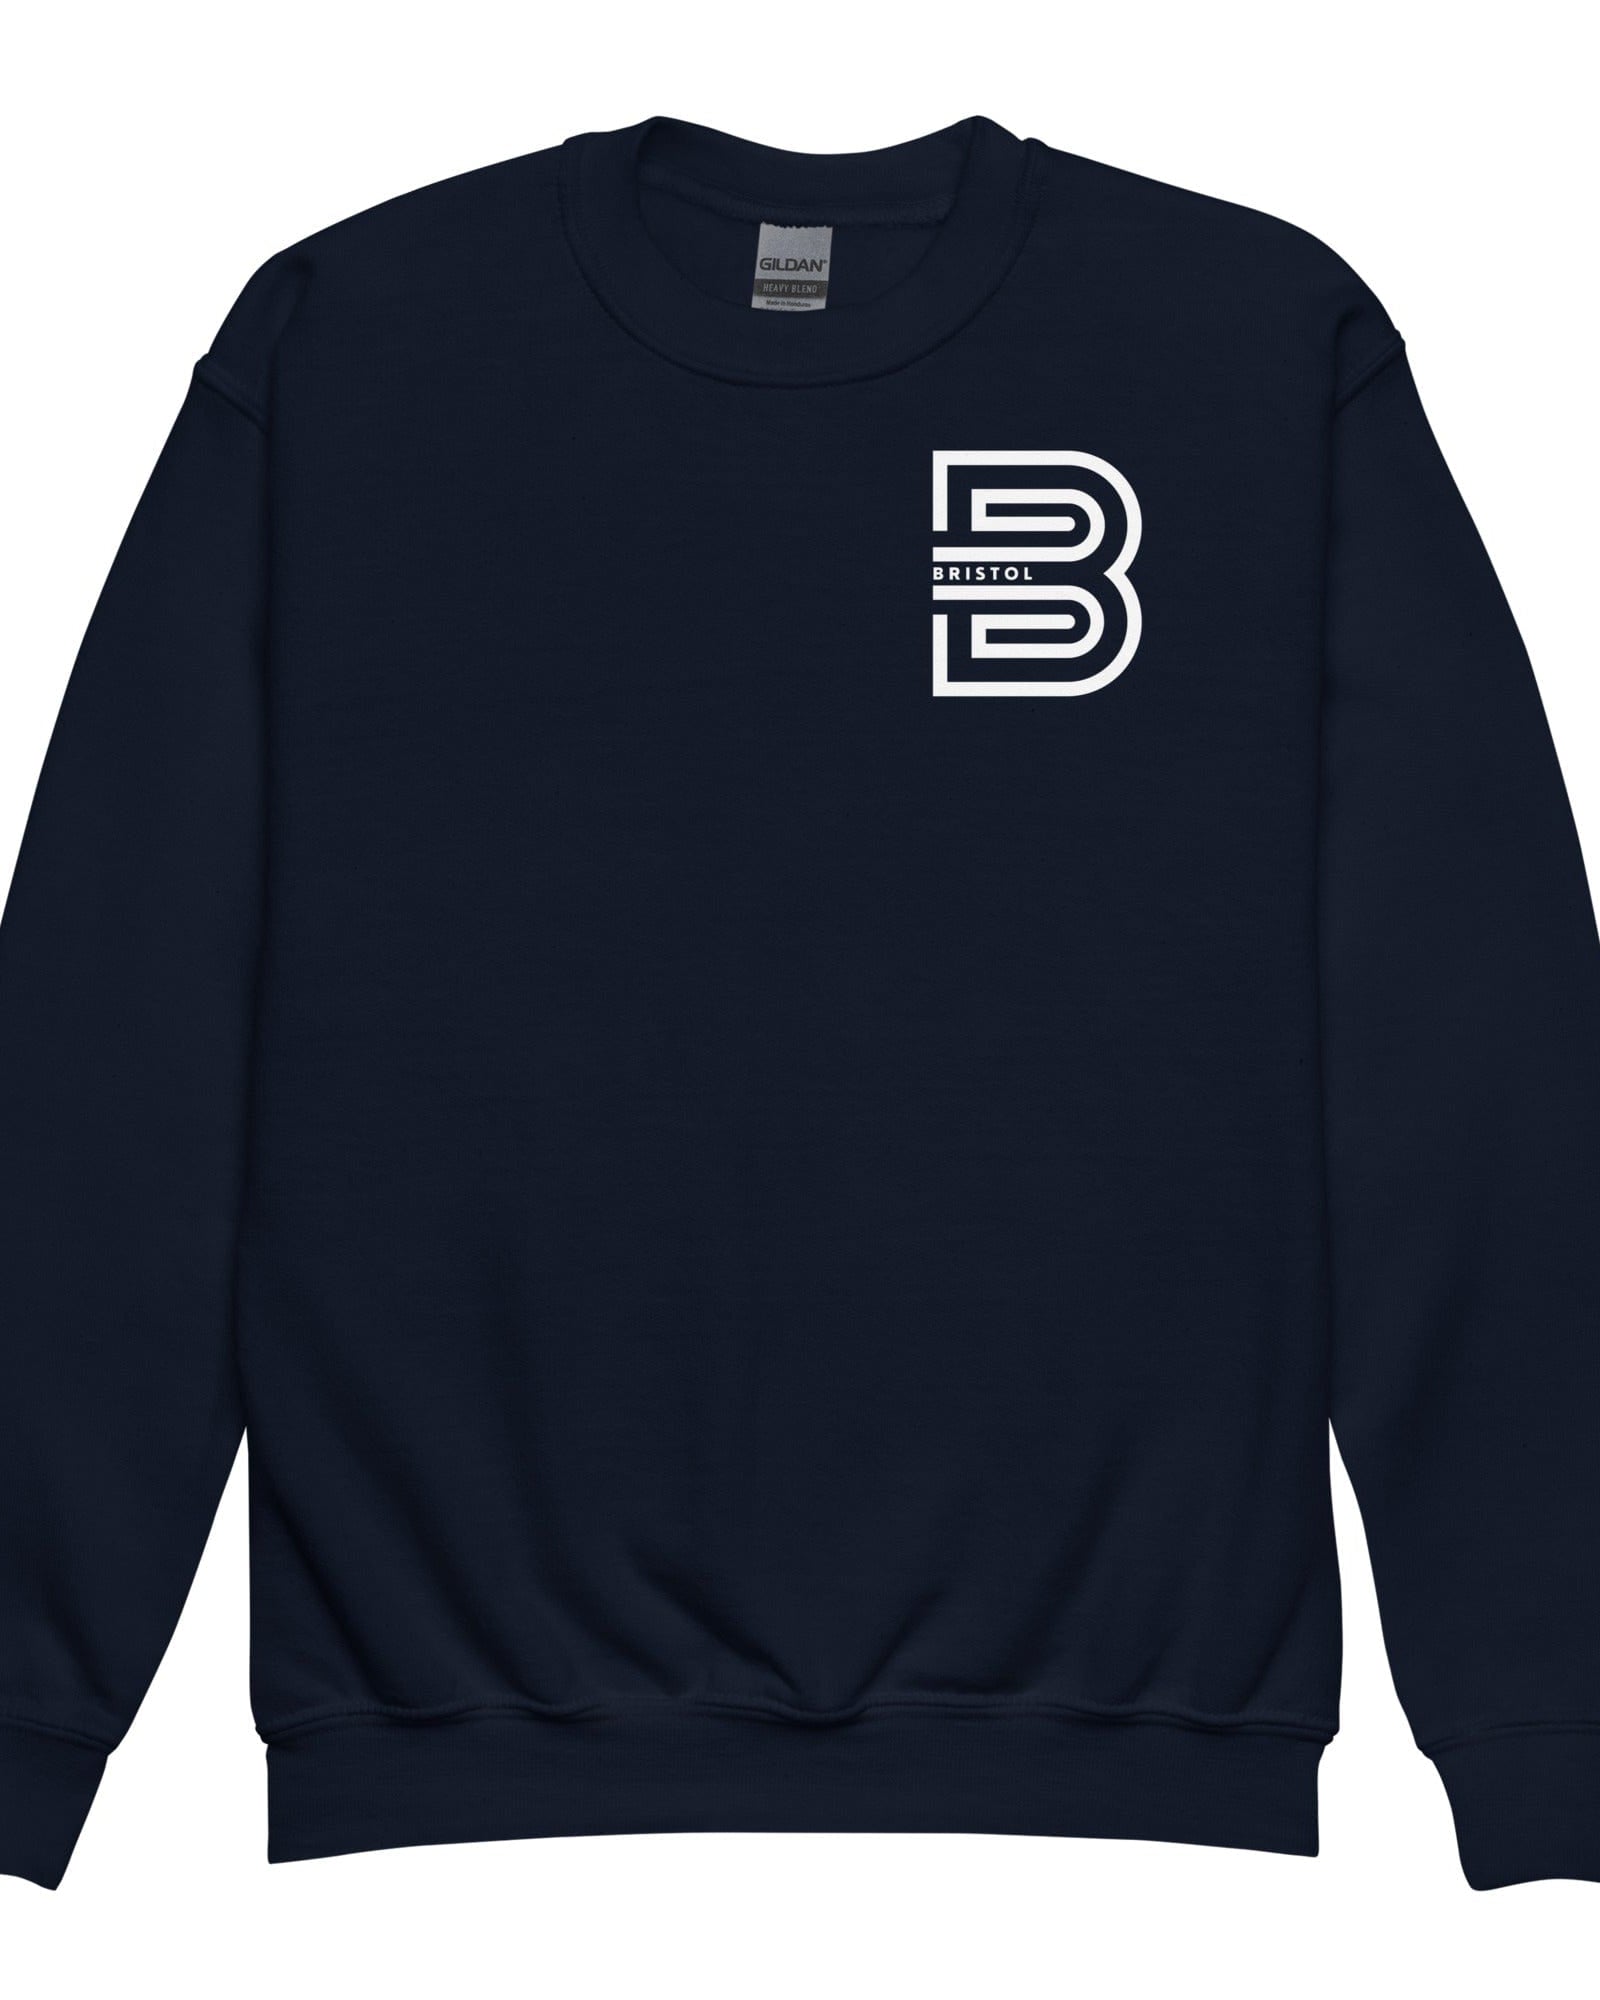 Bristol B Youth Crewneck Sweatshirt Navy / XS youth sweatshirts Jolly & Goode